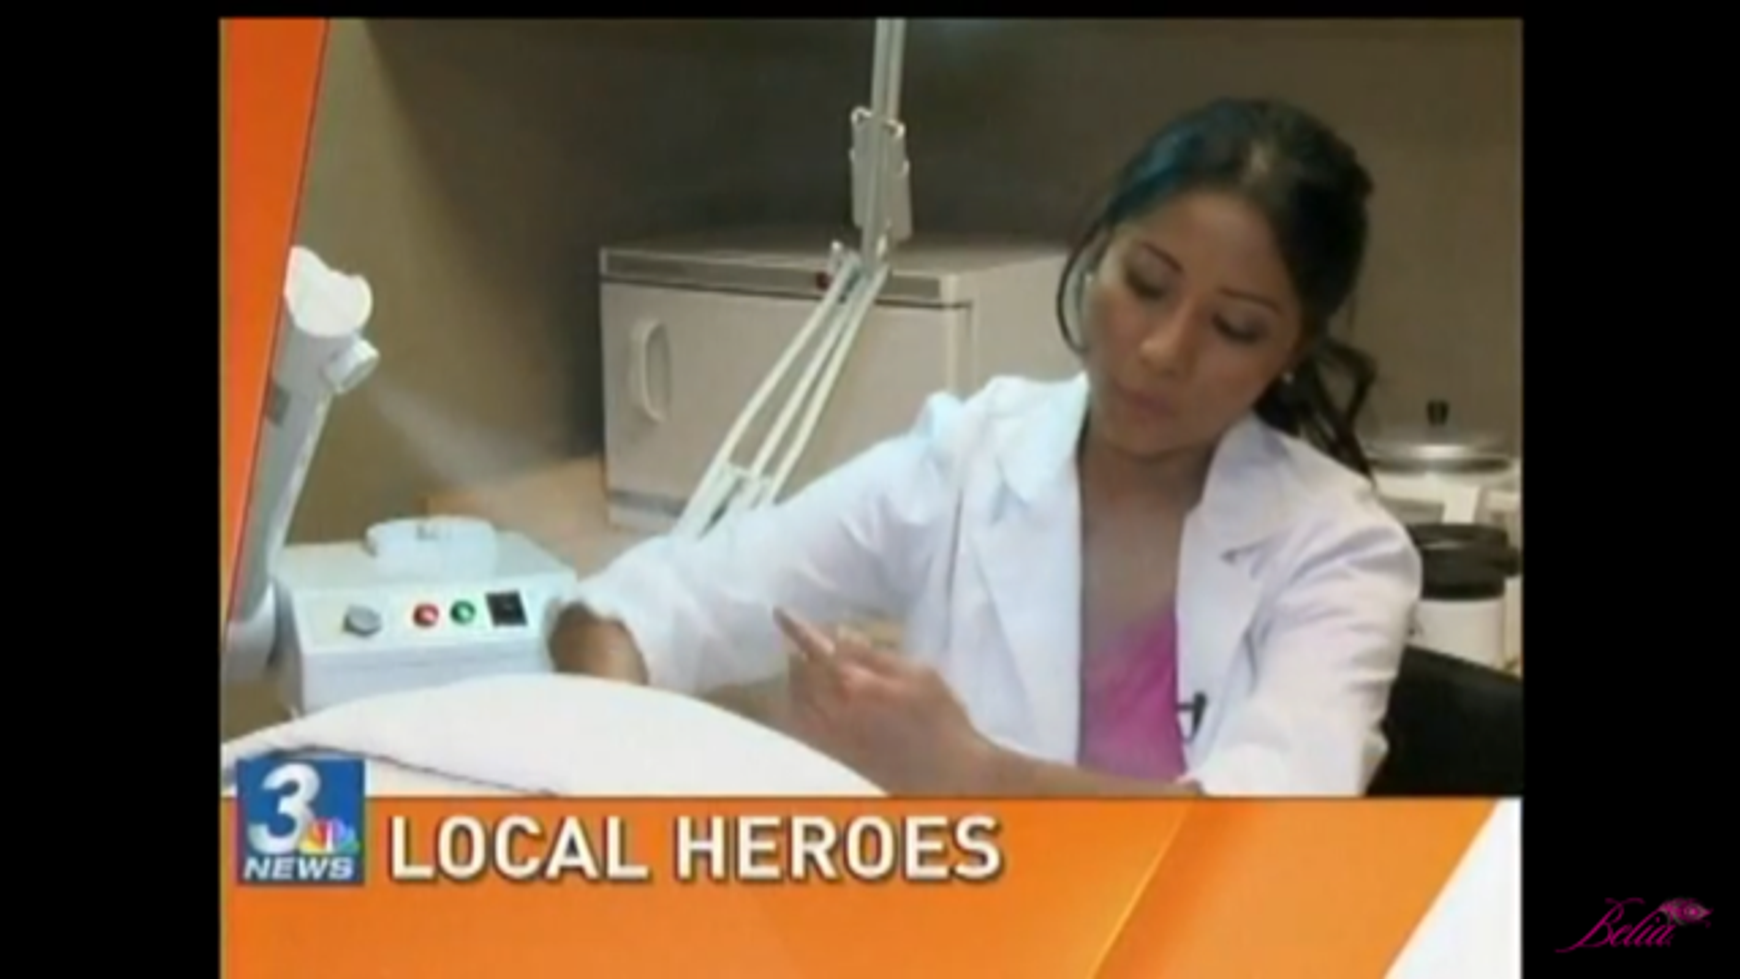 NBC Channel3 News - Local Heroes - Lia Yulianti